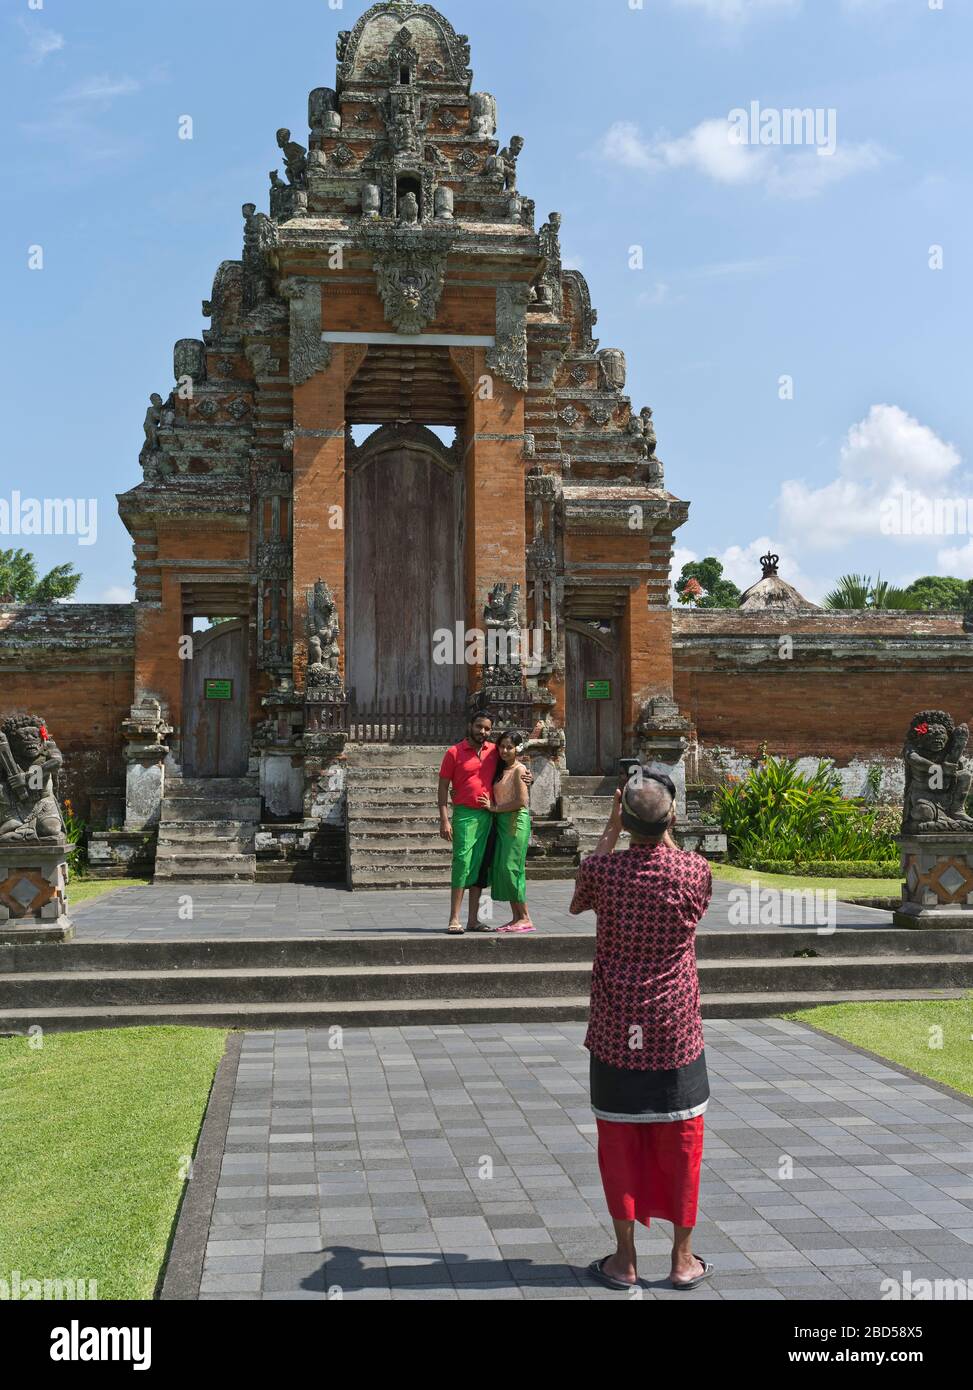 dh Pura Taman Ayun Royal Temple BALI INDONESIA Tourists being photo Balinese Hindu Mengwi temples Paduraksa hinduism gate architecture tourist Stock Photo